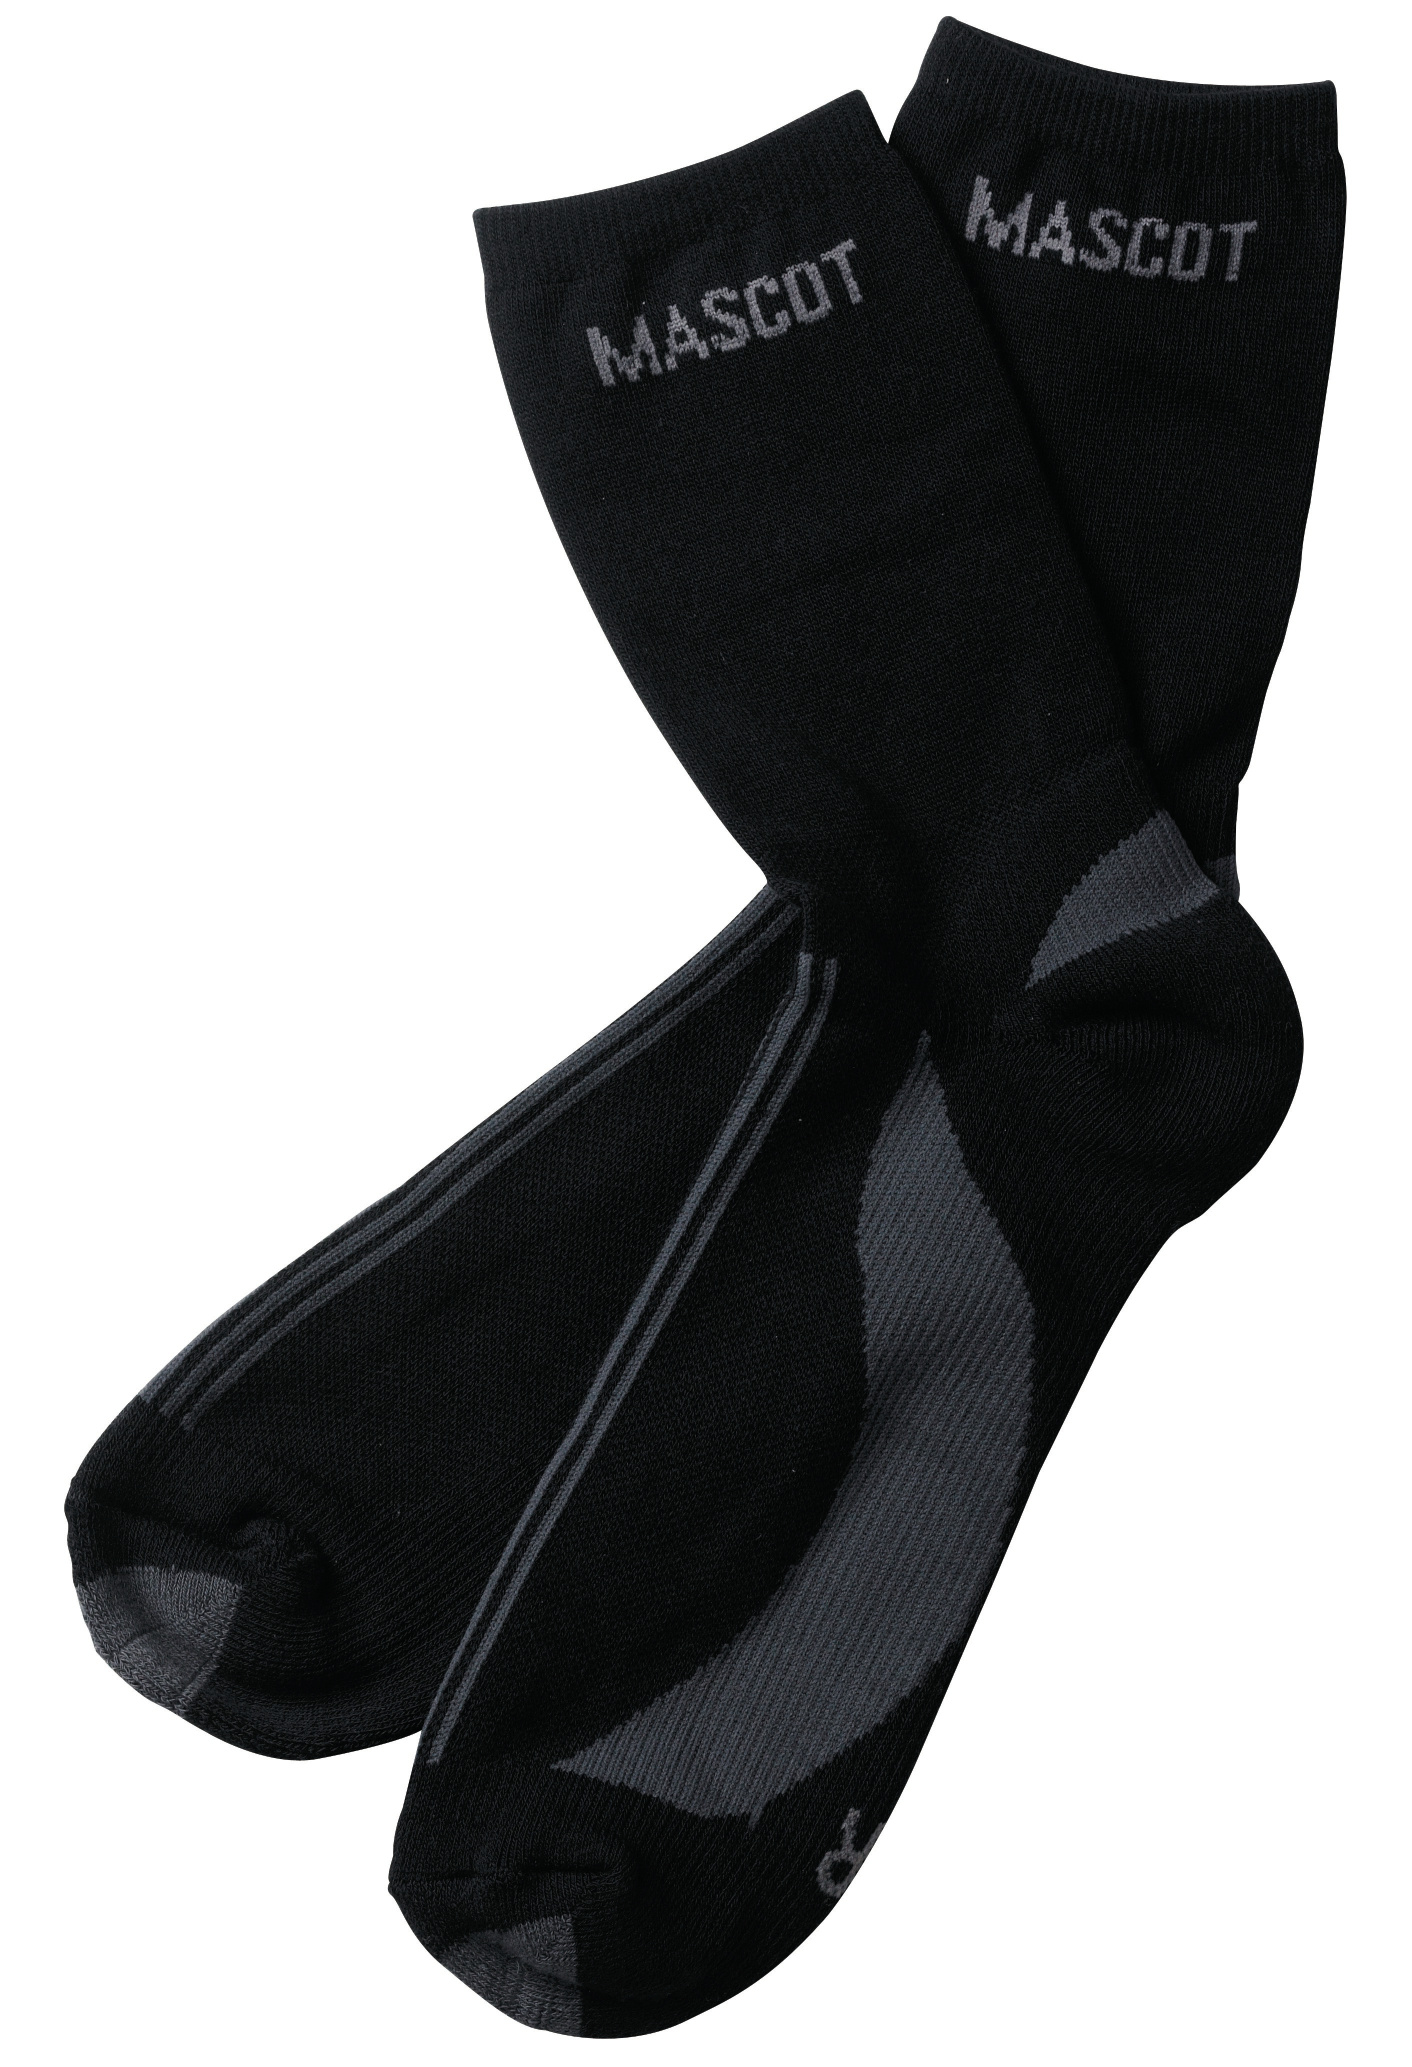 MASCOT Compete Socken "Asmara" Nr. 50410-881-0918